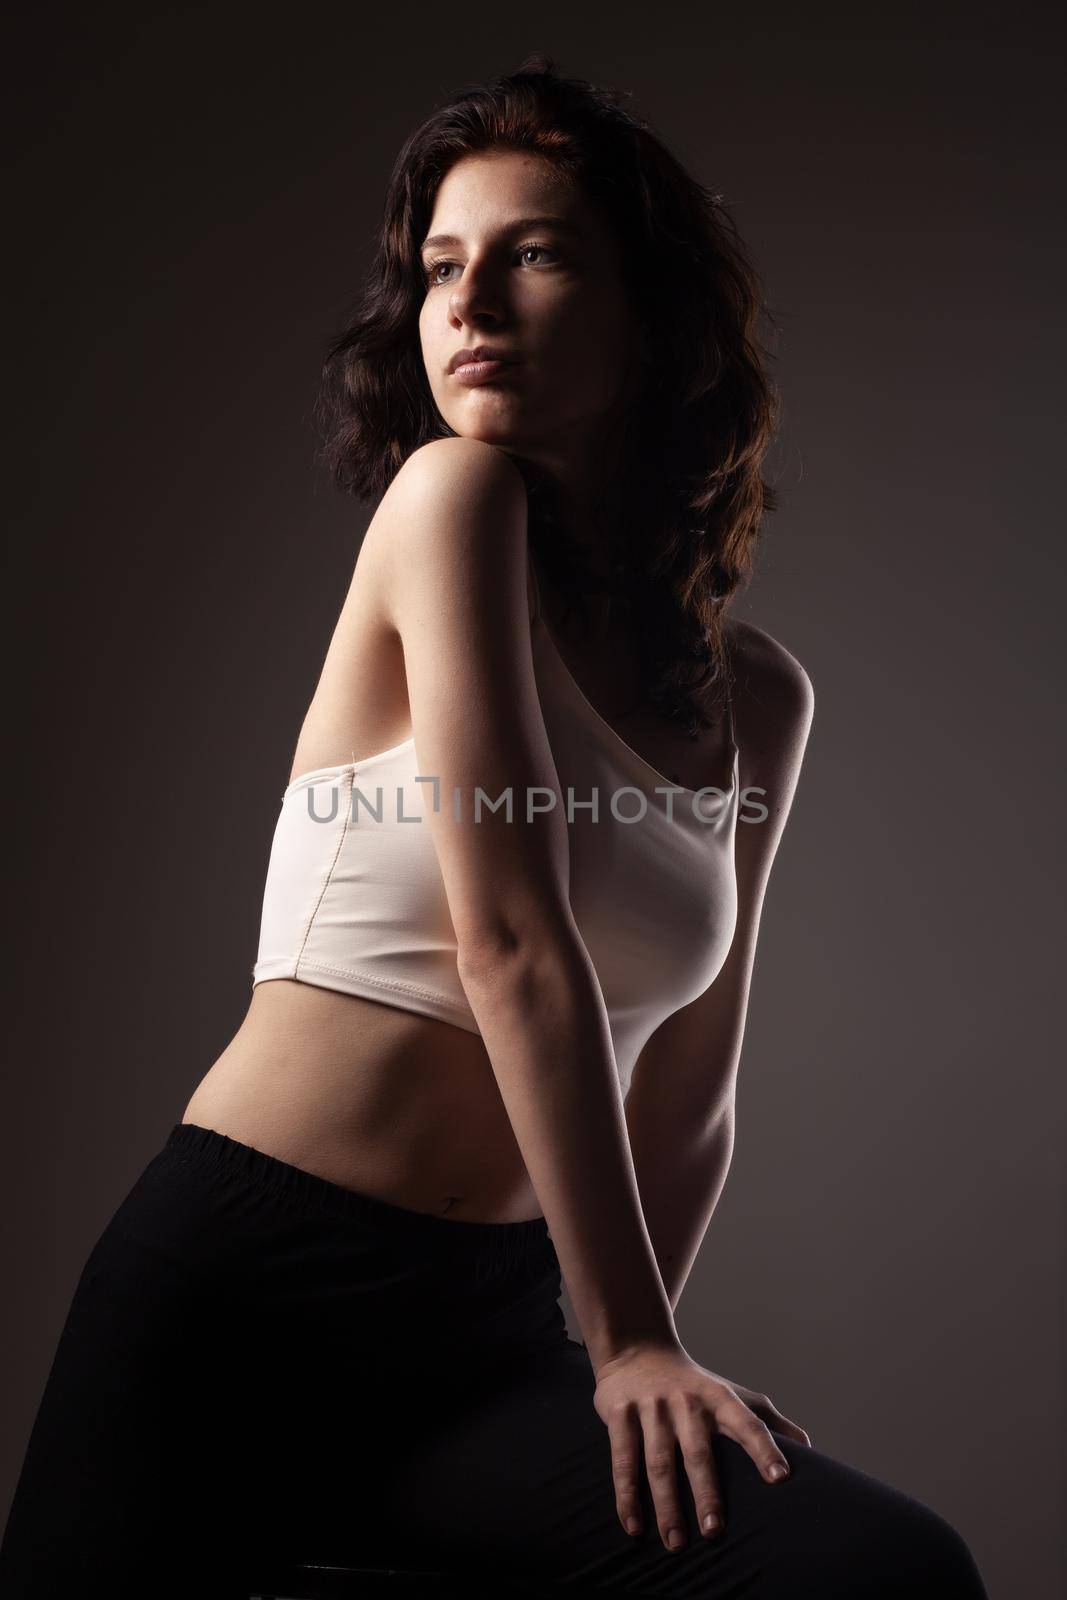 Beautiful teenage girl studio portrait against dark background.. by kokimk